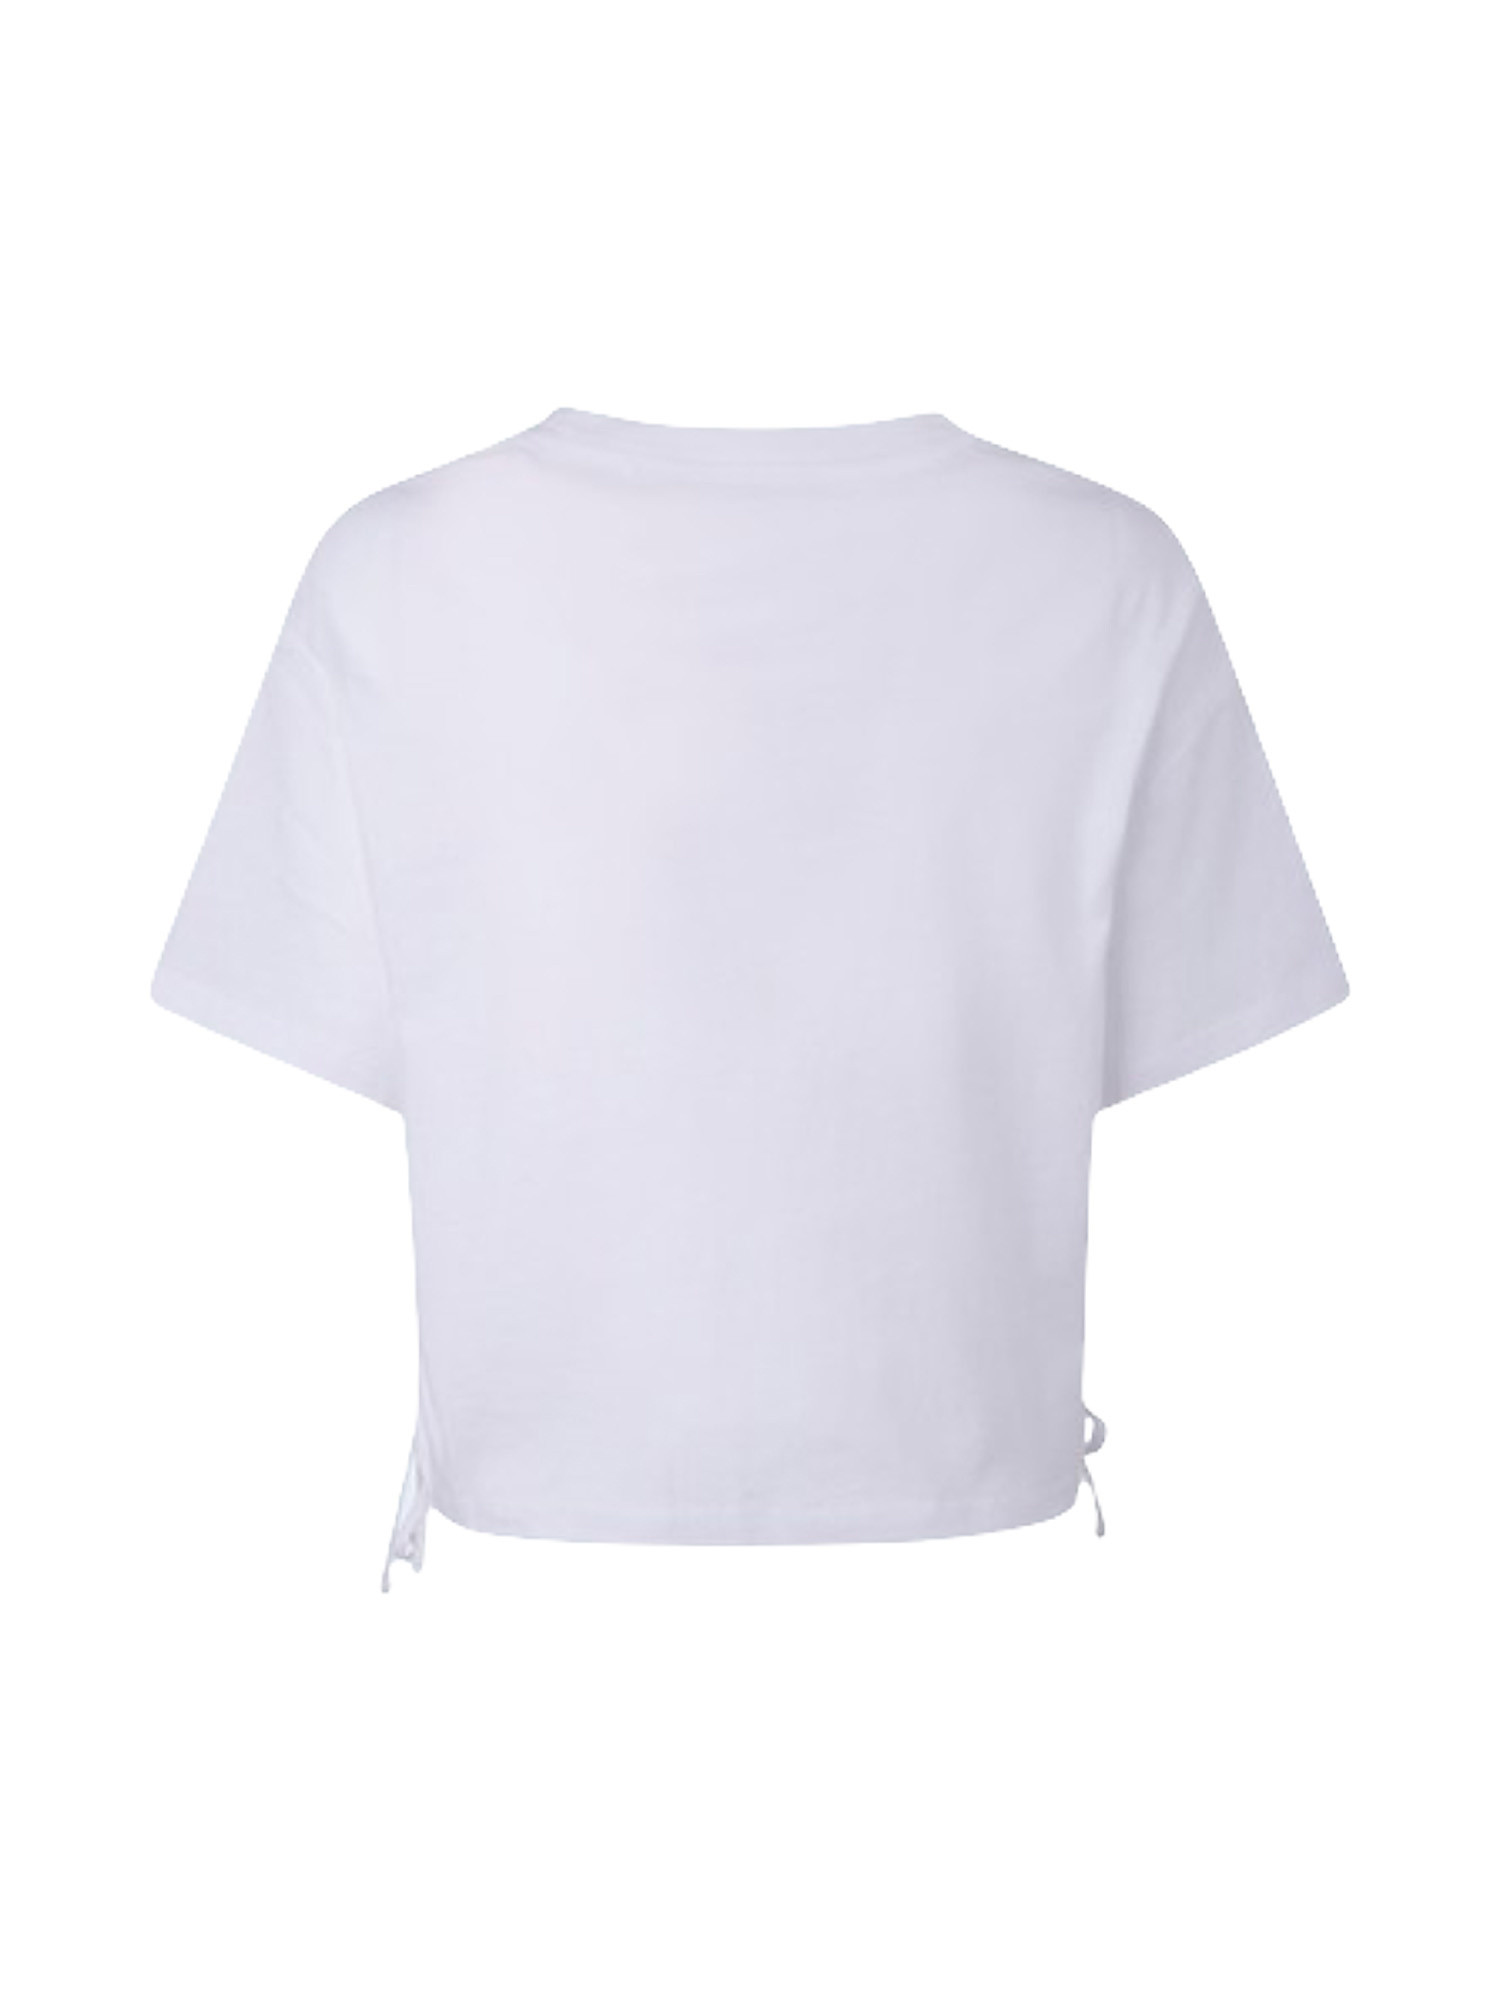 Cara chest logo t-shirt, White, large image number 1